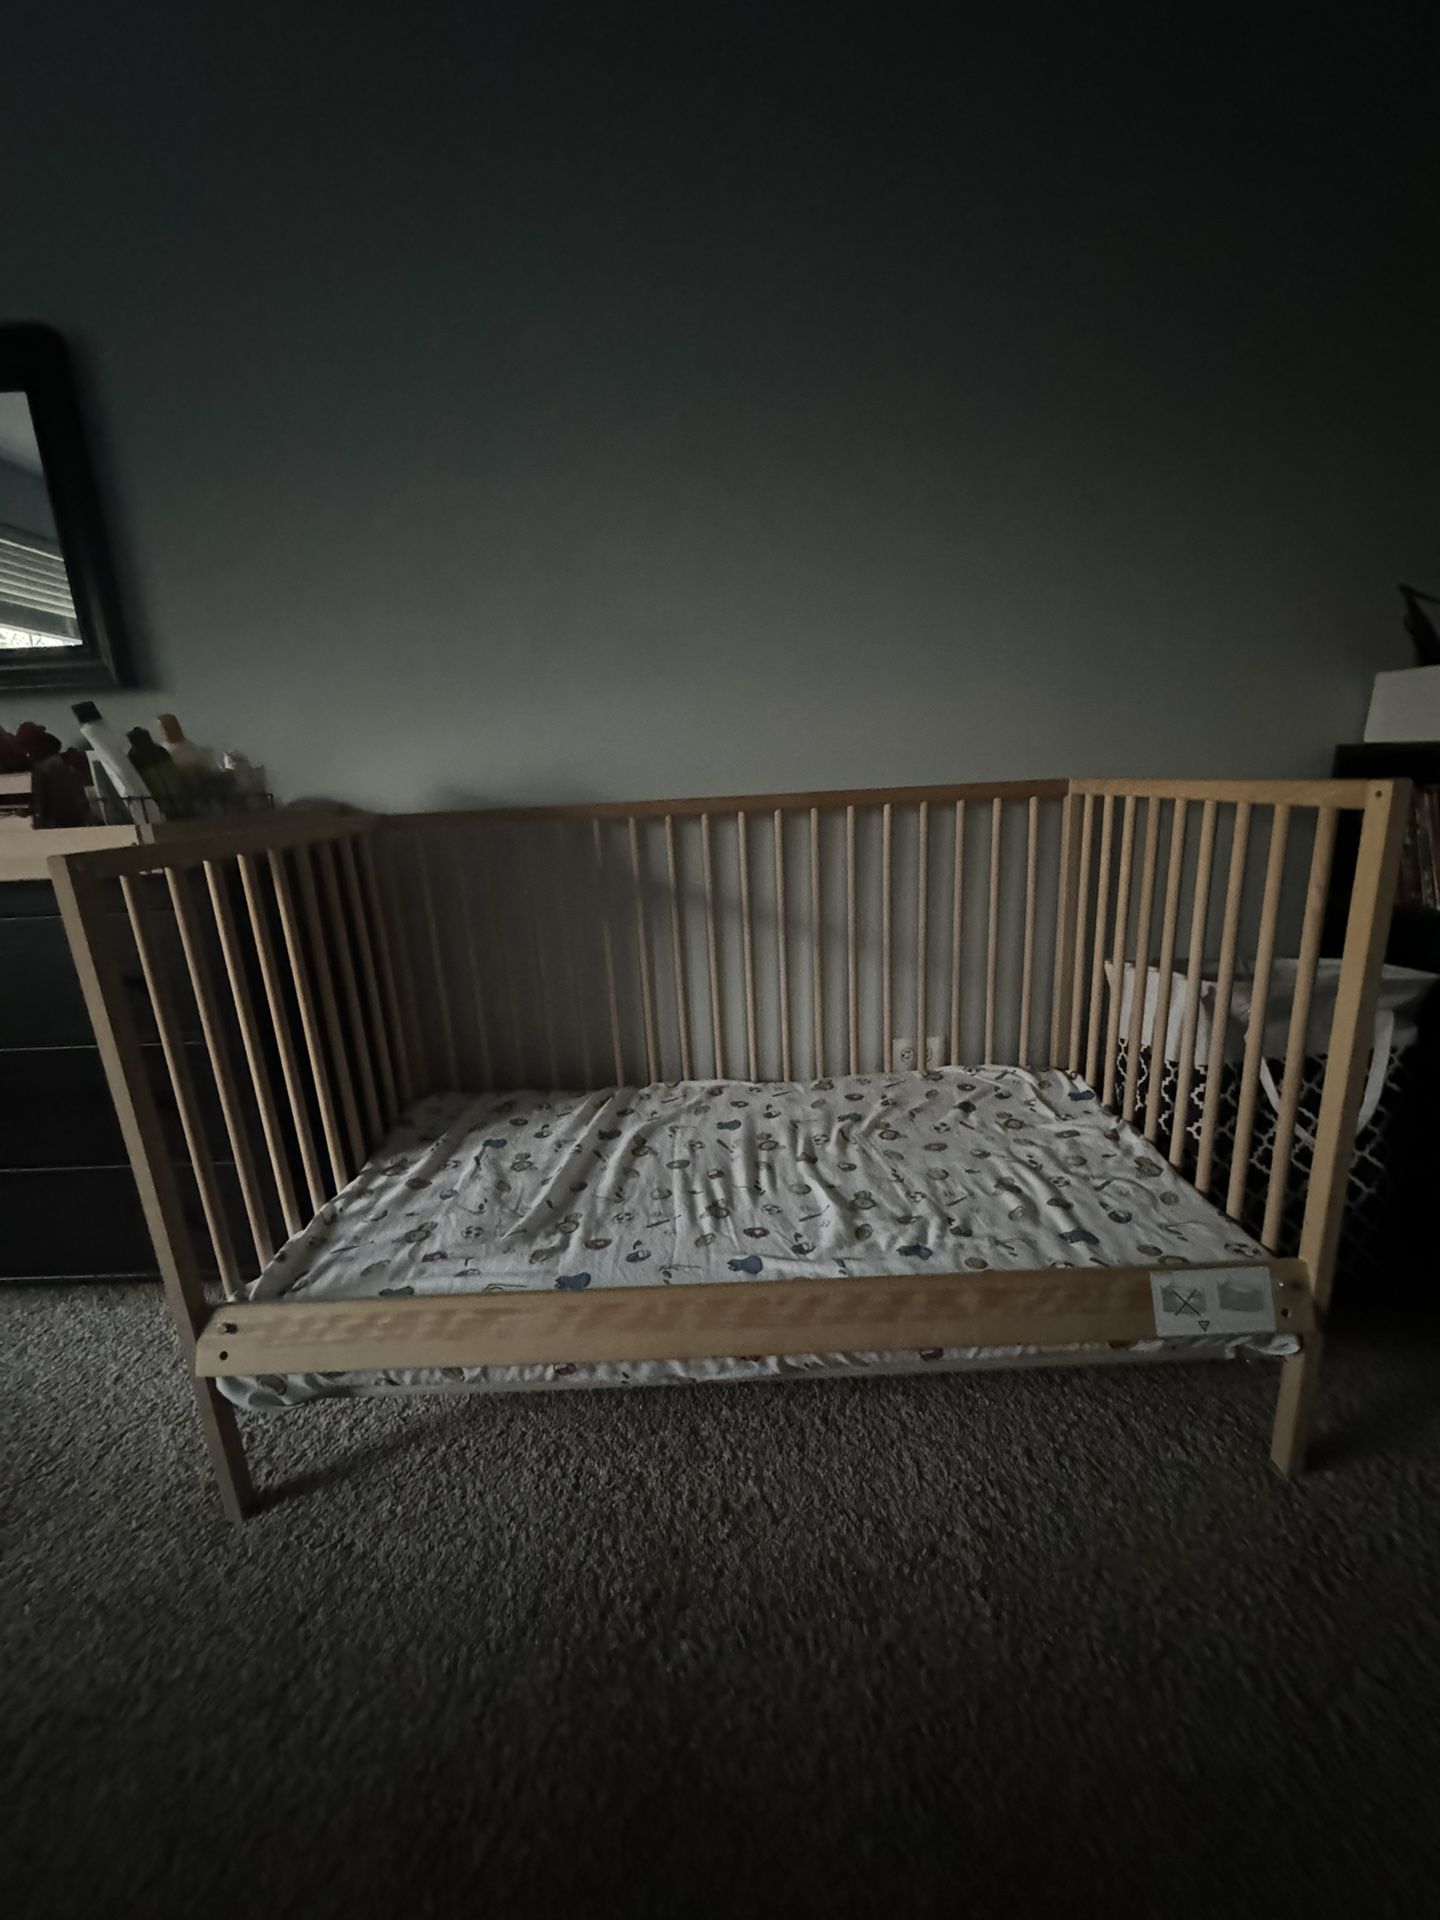 Ikea Open Crib With Mattress